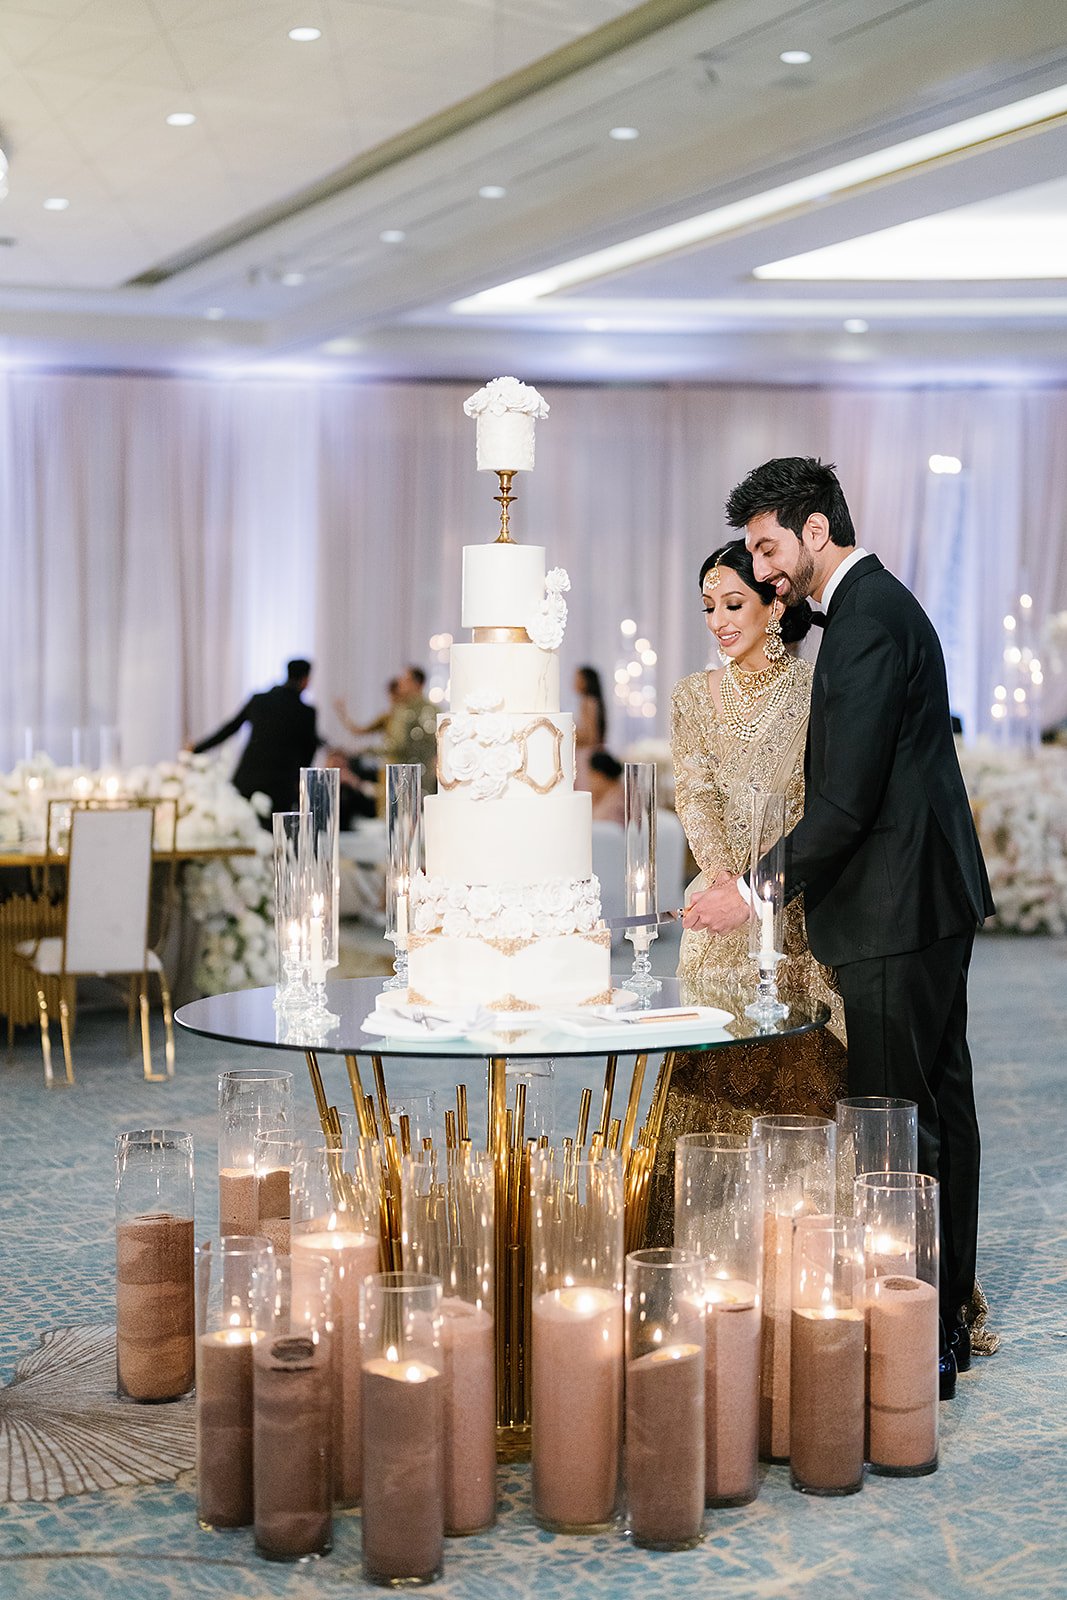 Bride and groom cut fairytale wedding cake